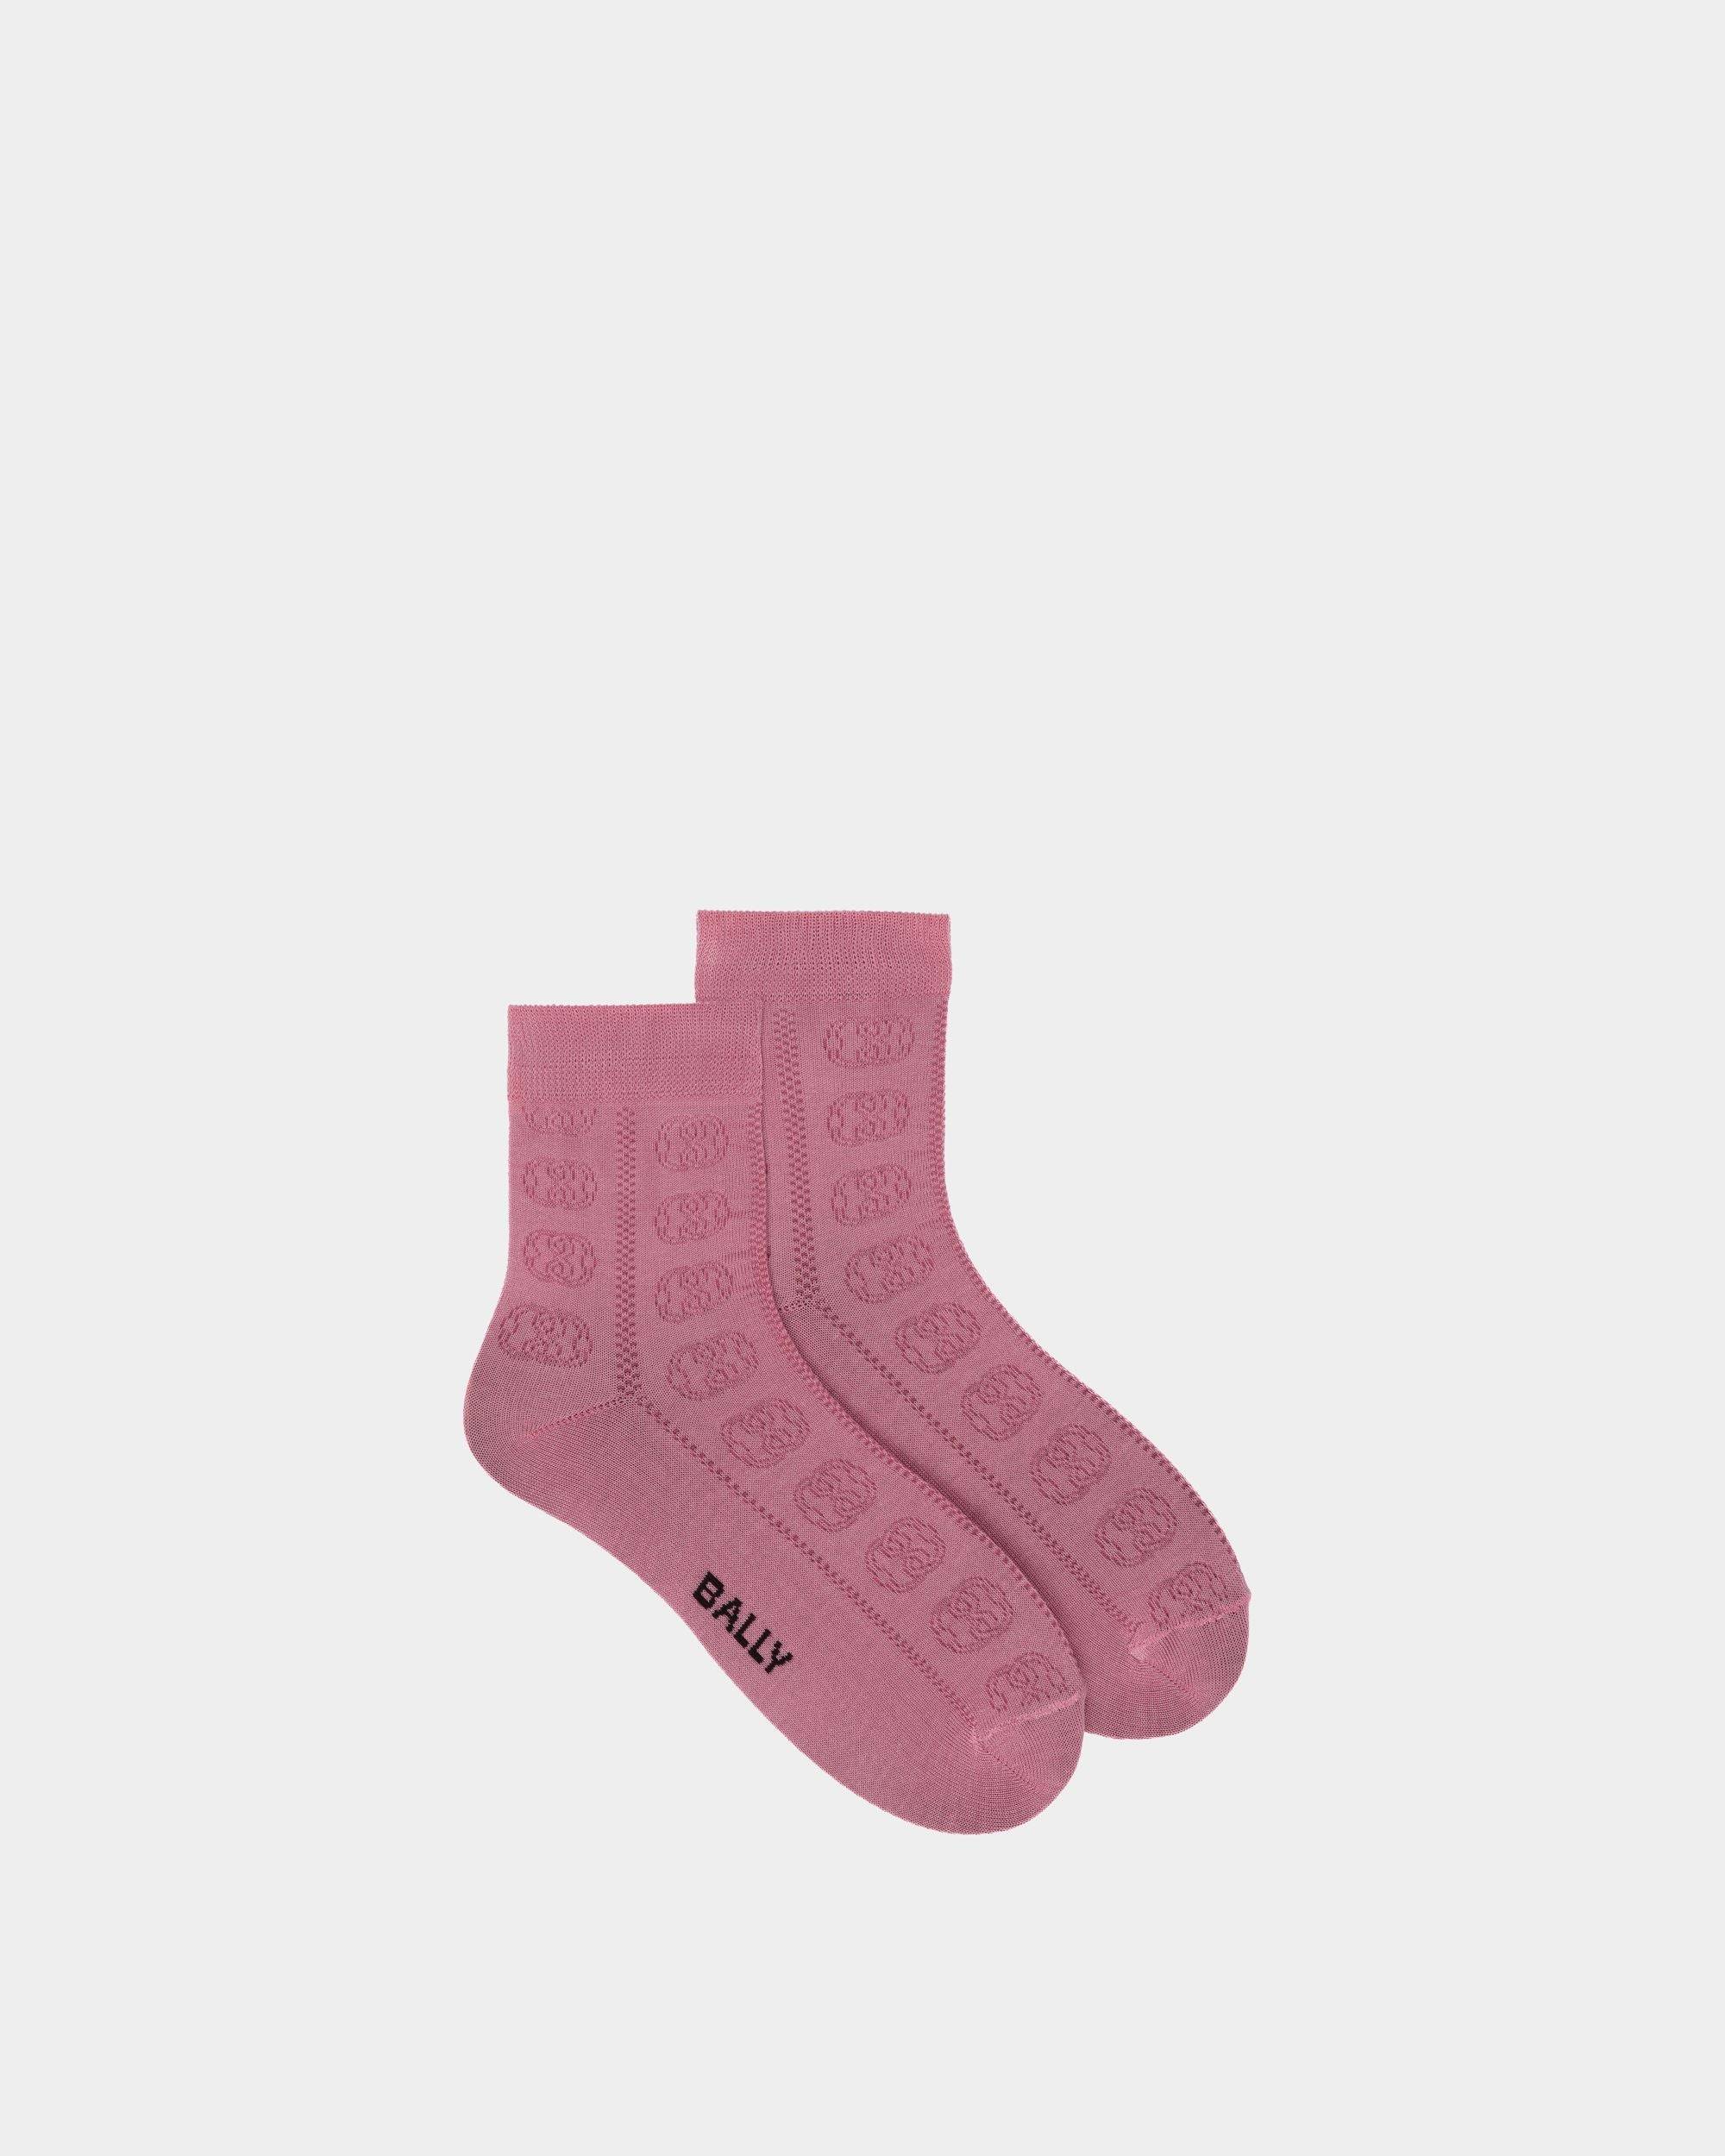 Women's Logo Socks In Pink Cotton | Bally | Still Life Top